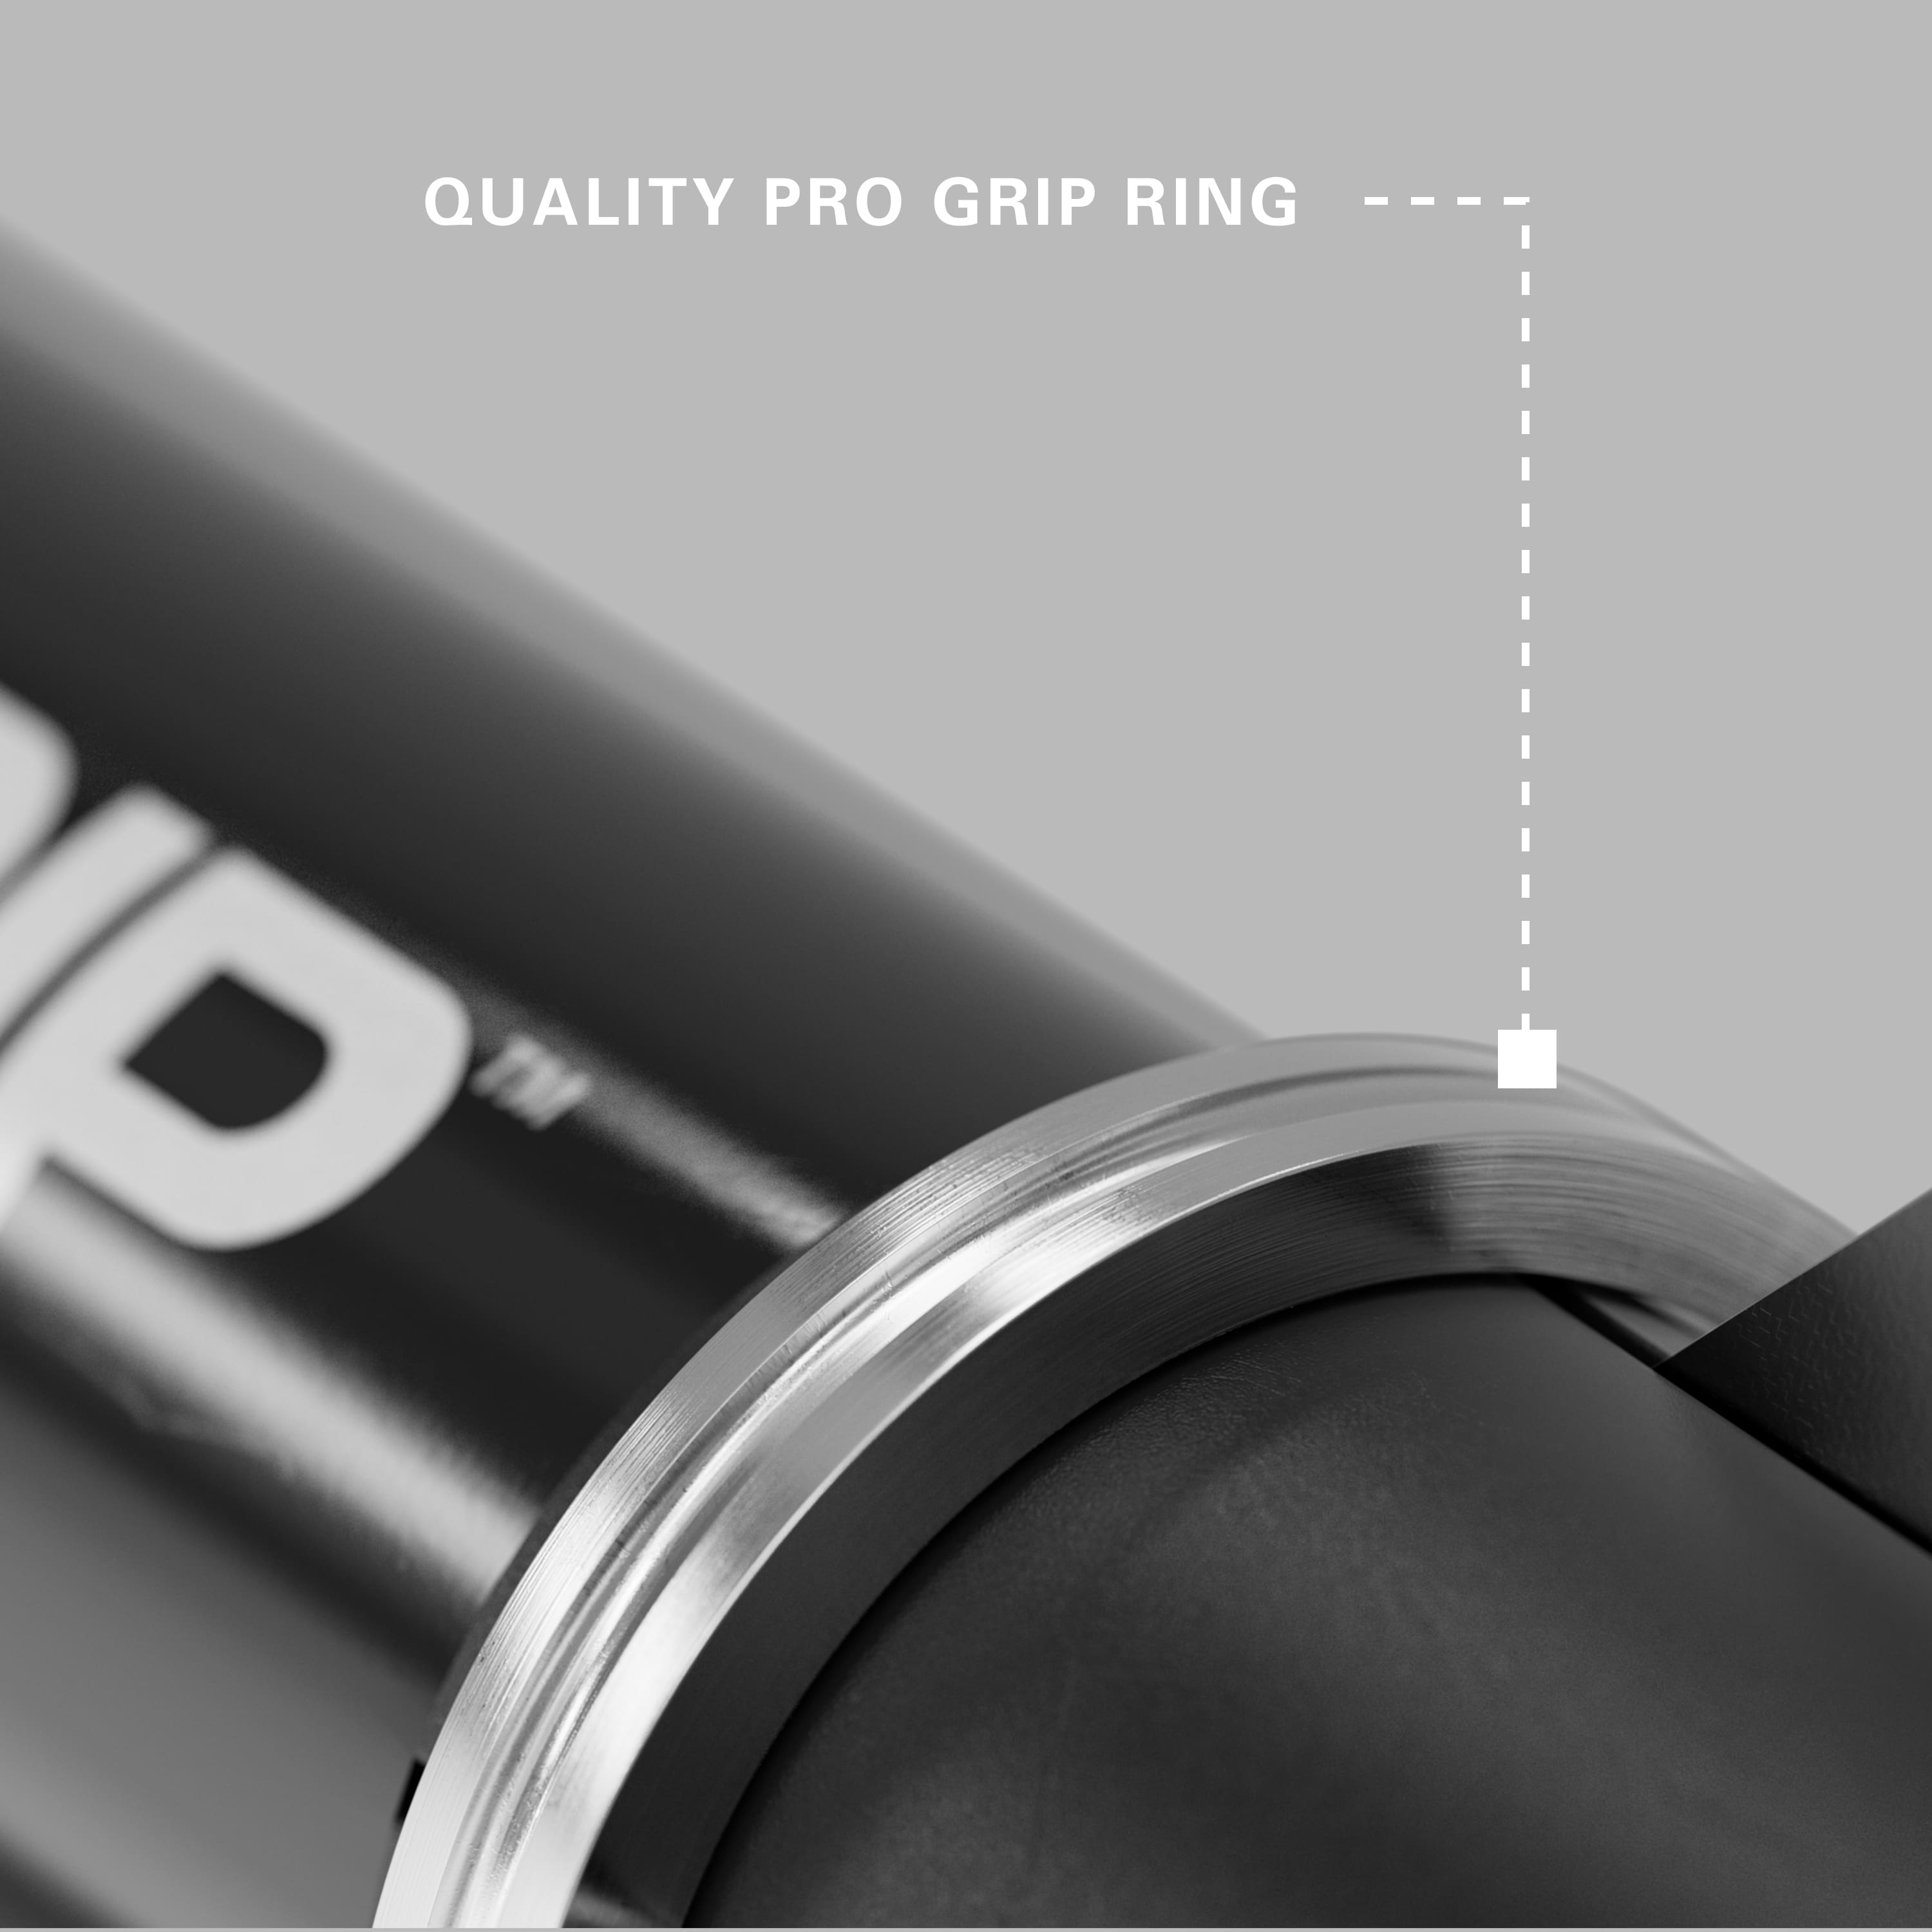 Target Pro Grip Shafts Set schwarz